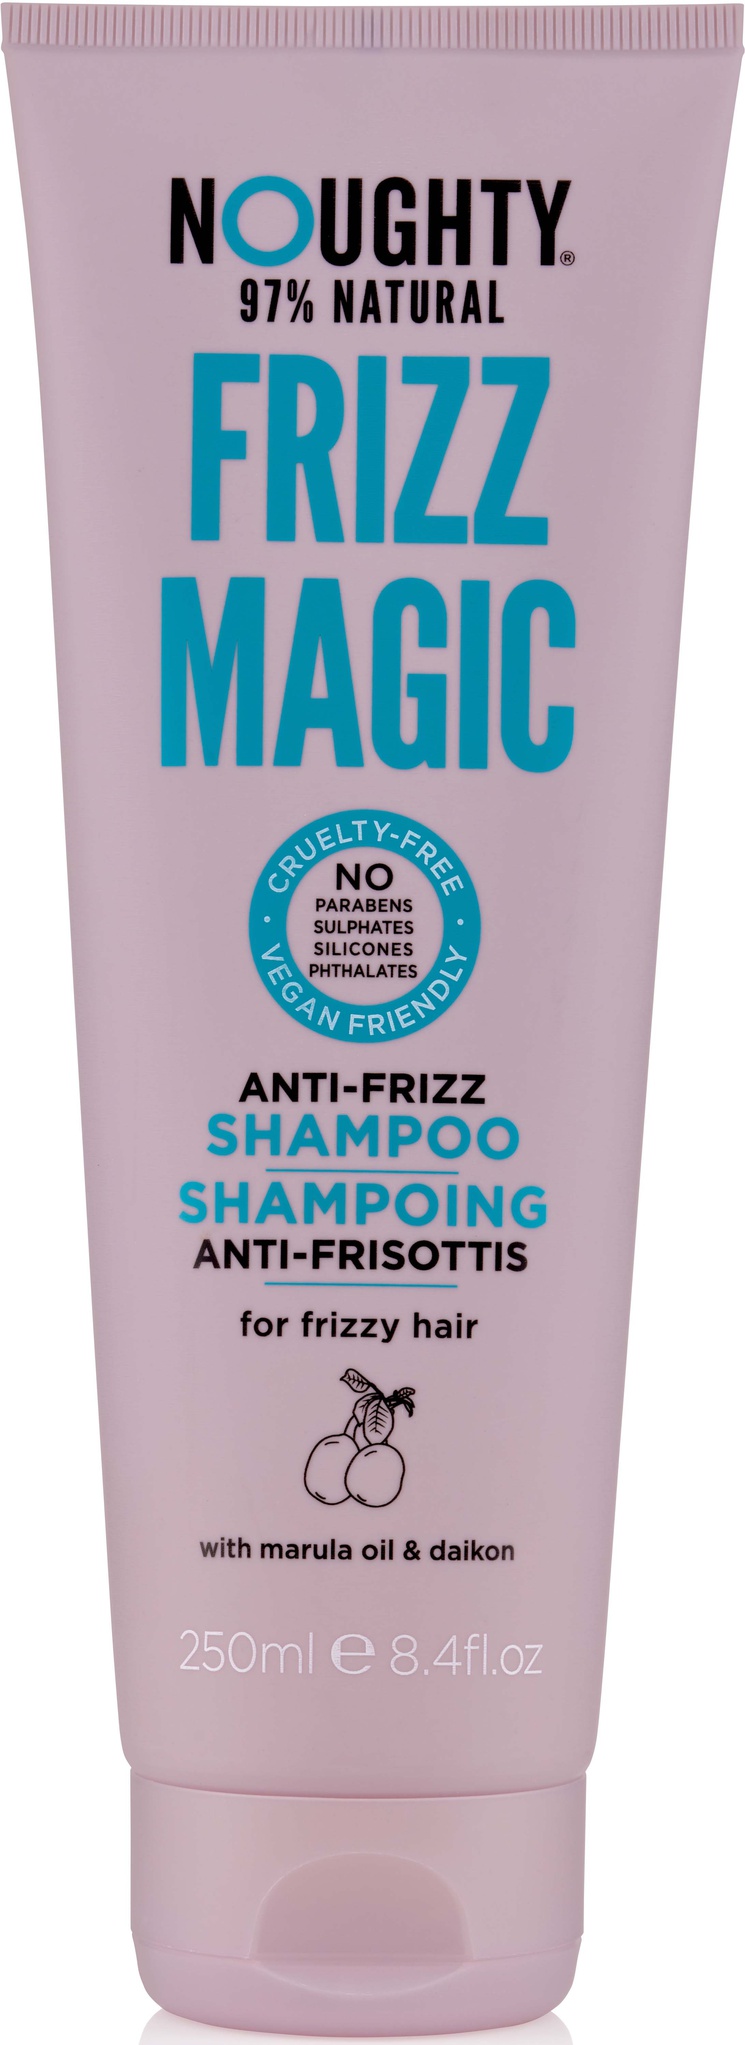 Noughty Frizz Magic Shampoo